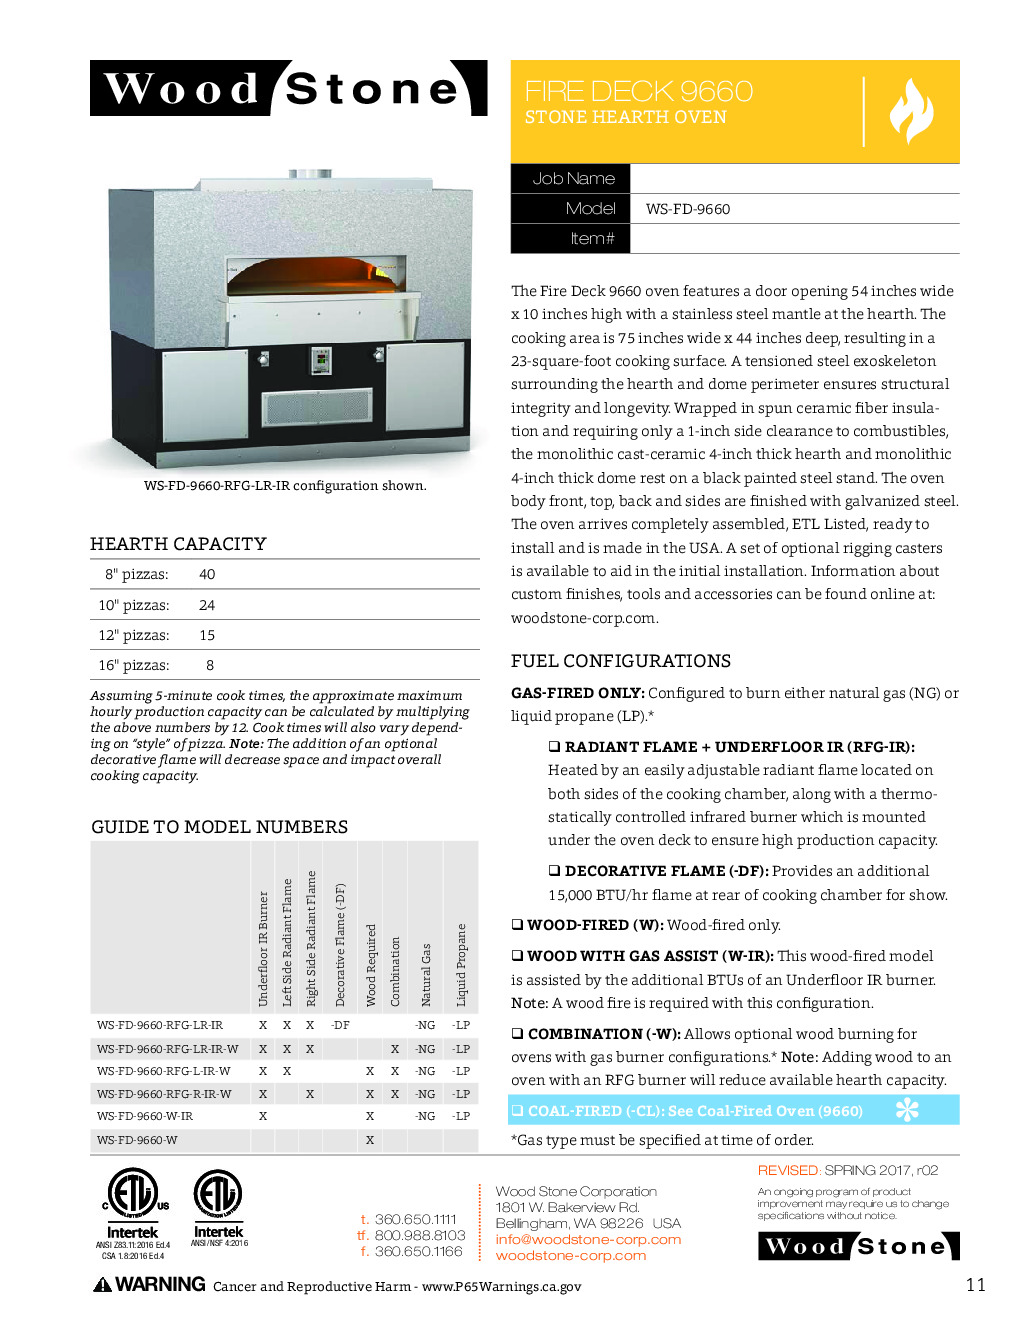 Wood Stone FD-9660-RFGL-IRW Wood / Coal / Gas Fired Oven